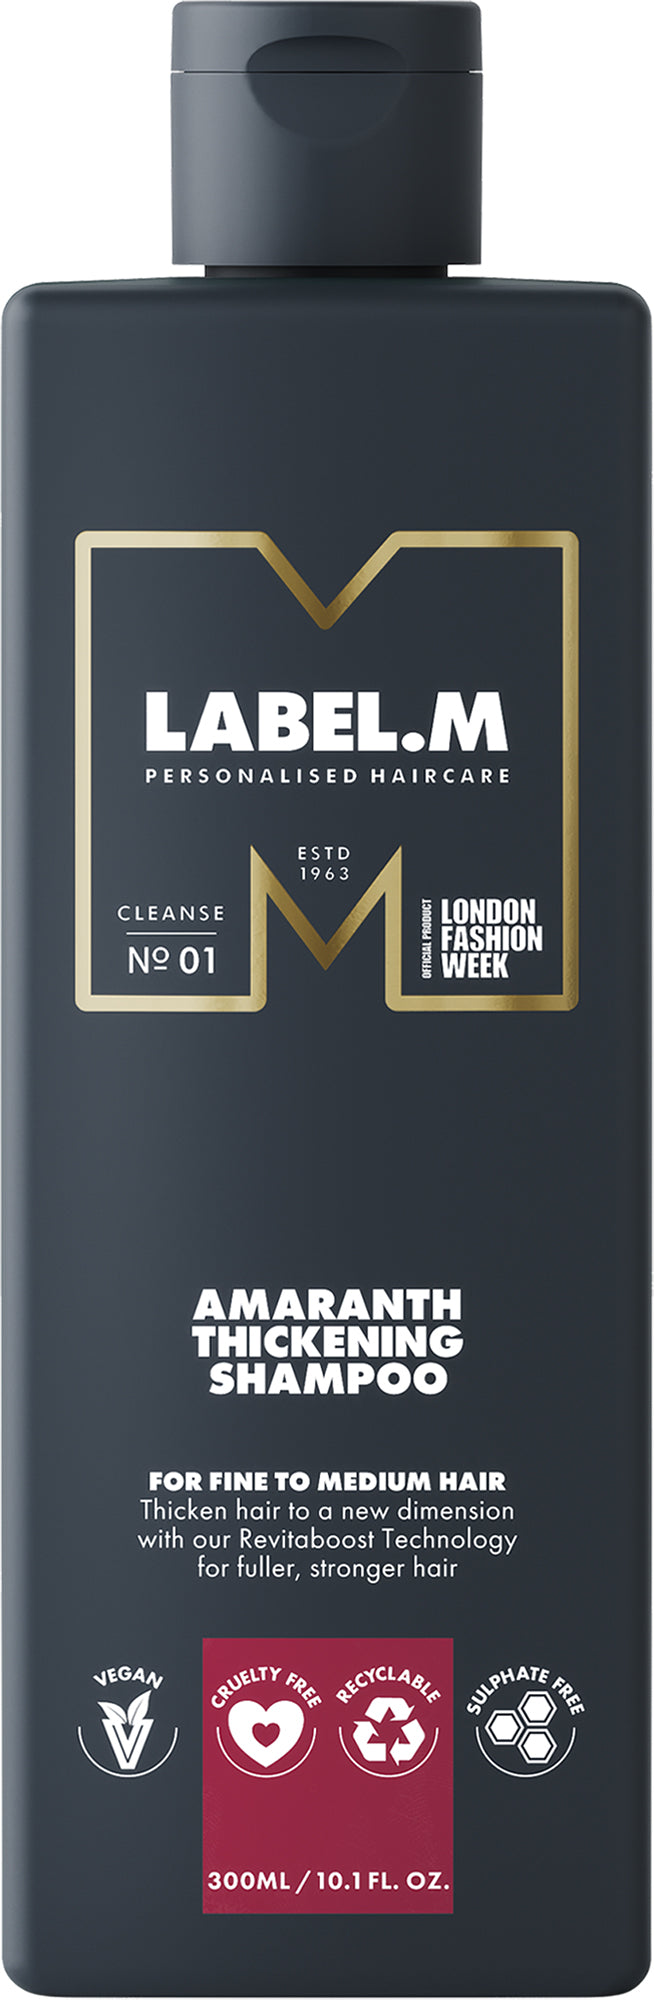 Label.m Amaranth thickening shampoo 1000 ml